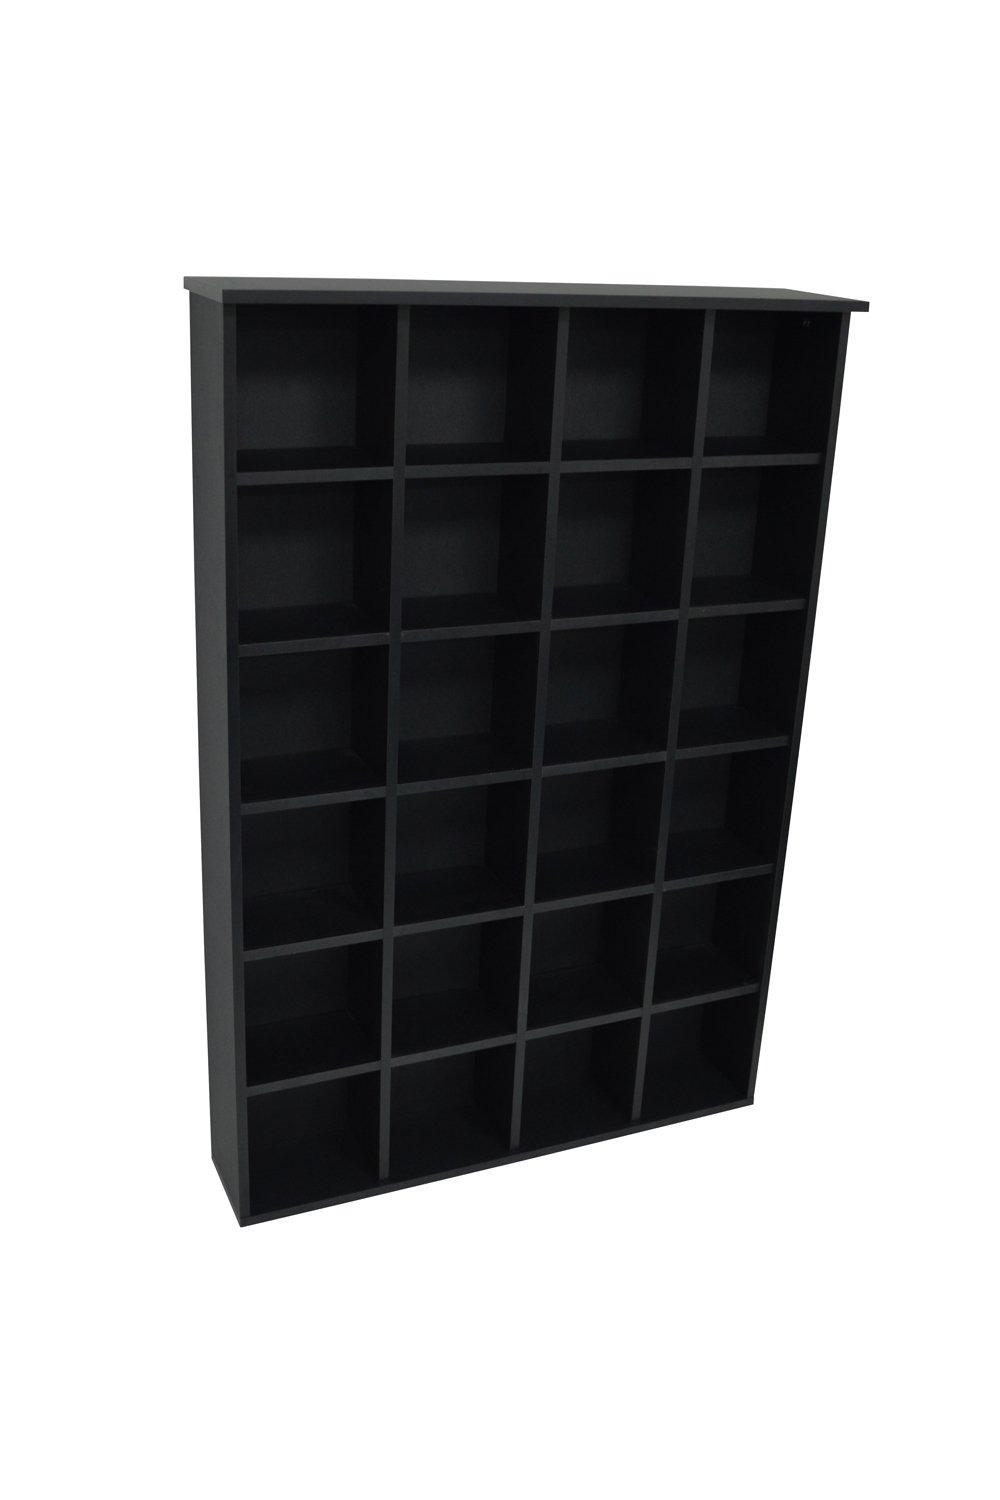 Pigeon Hole - 480 Cd / 312 Dvd Blu-ray Media Cubby Storage Shelves - Black